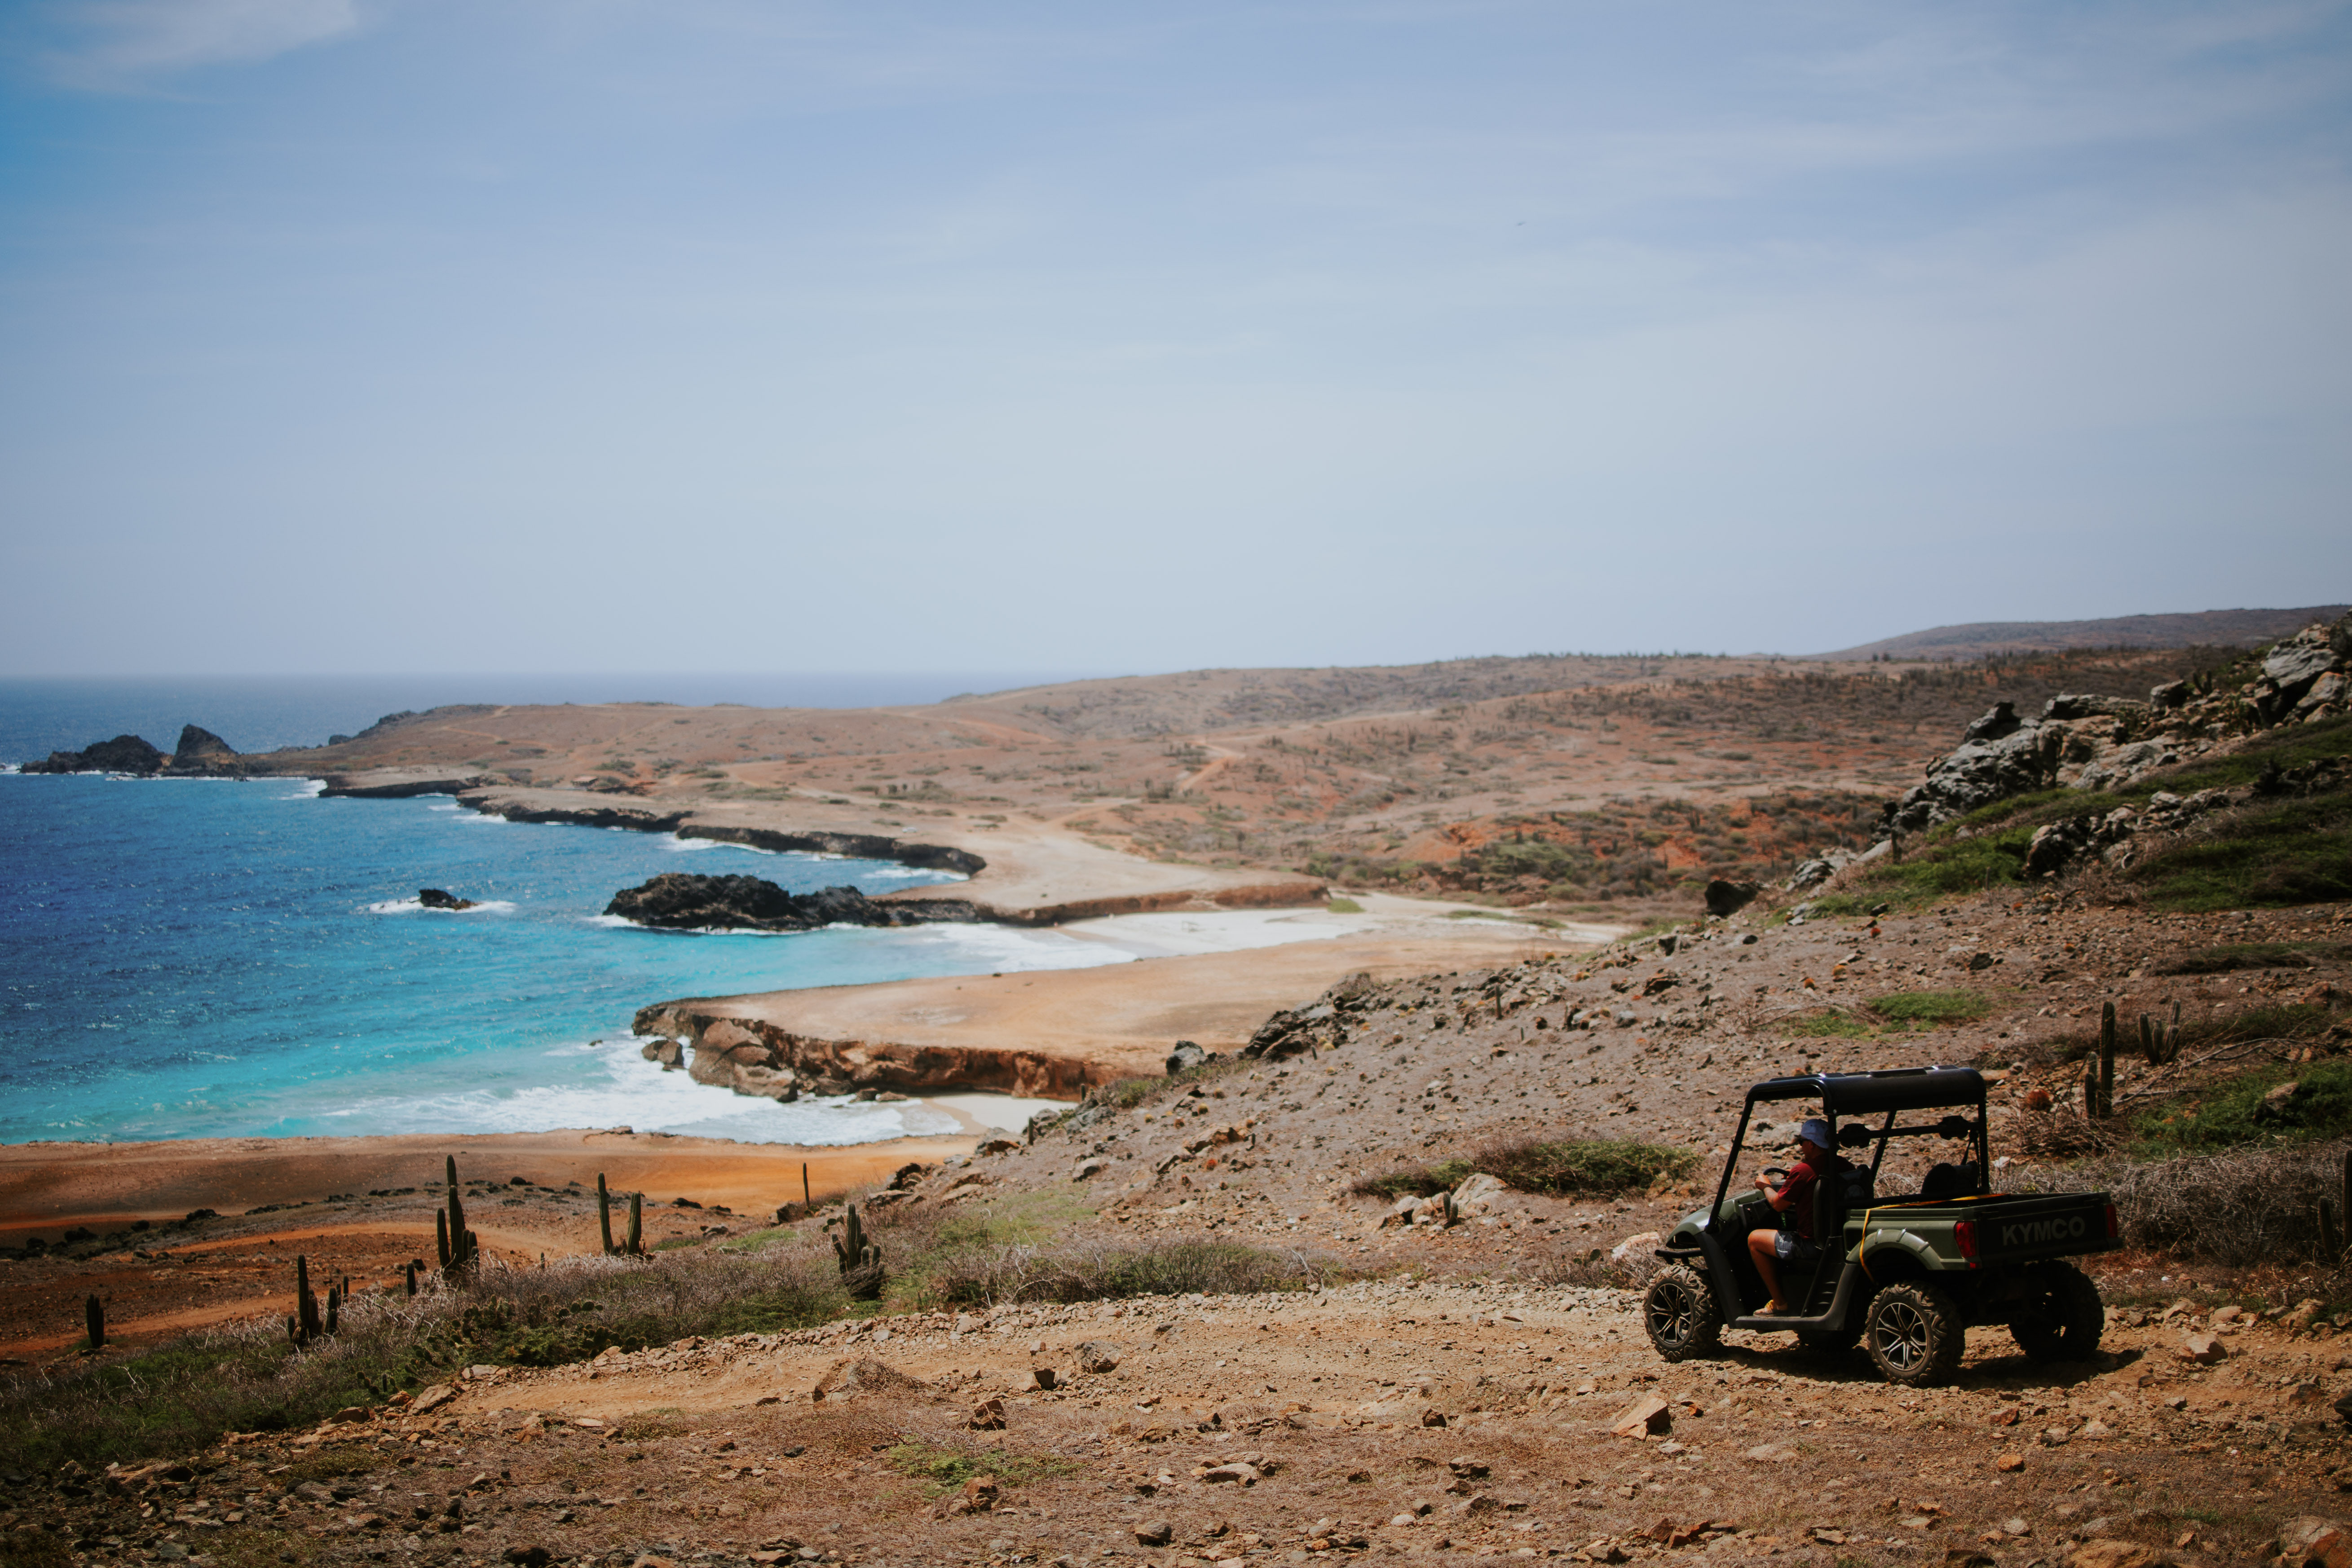 A scenery photograph of Aruba's coastline